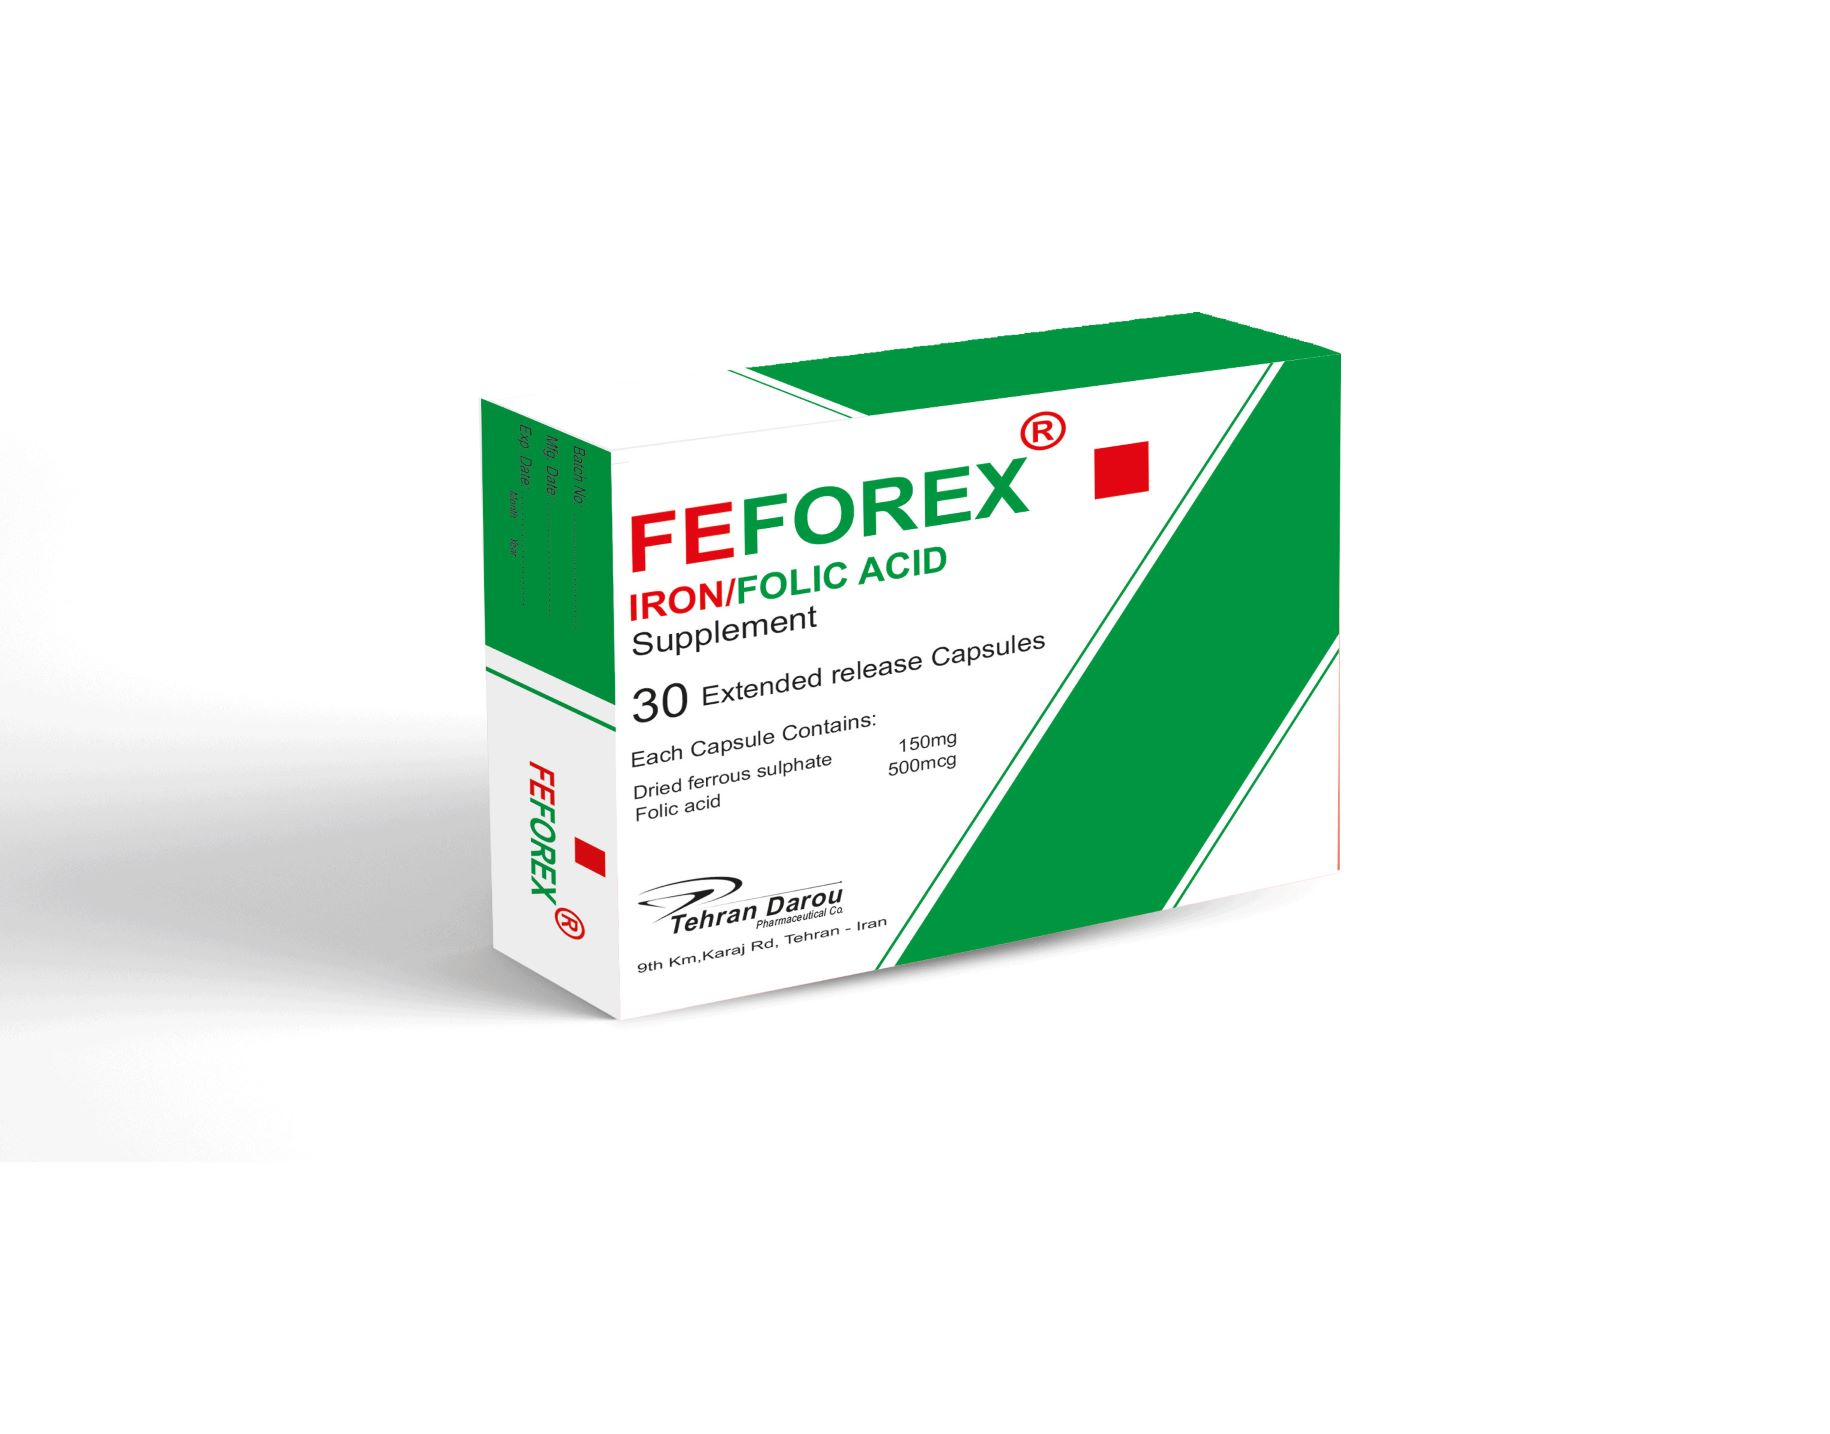 Feforex